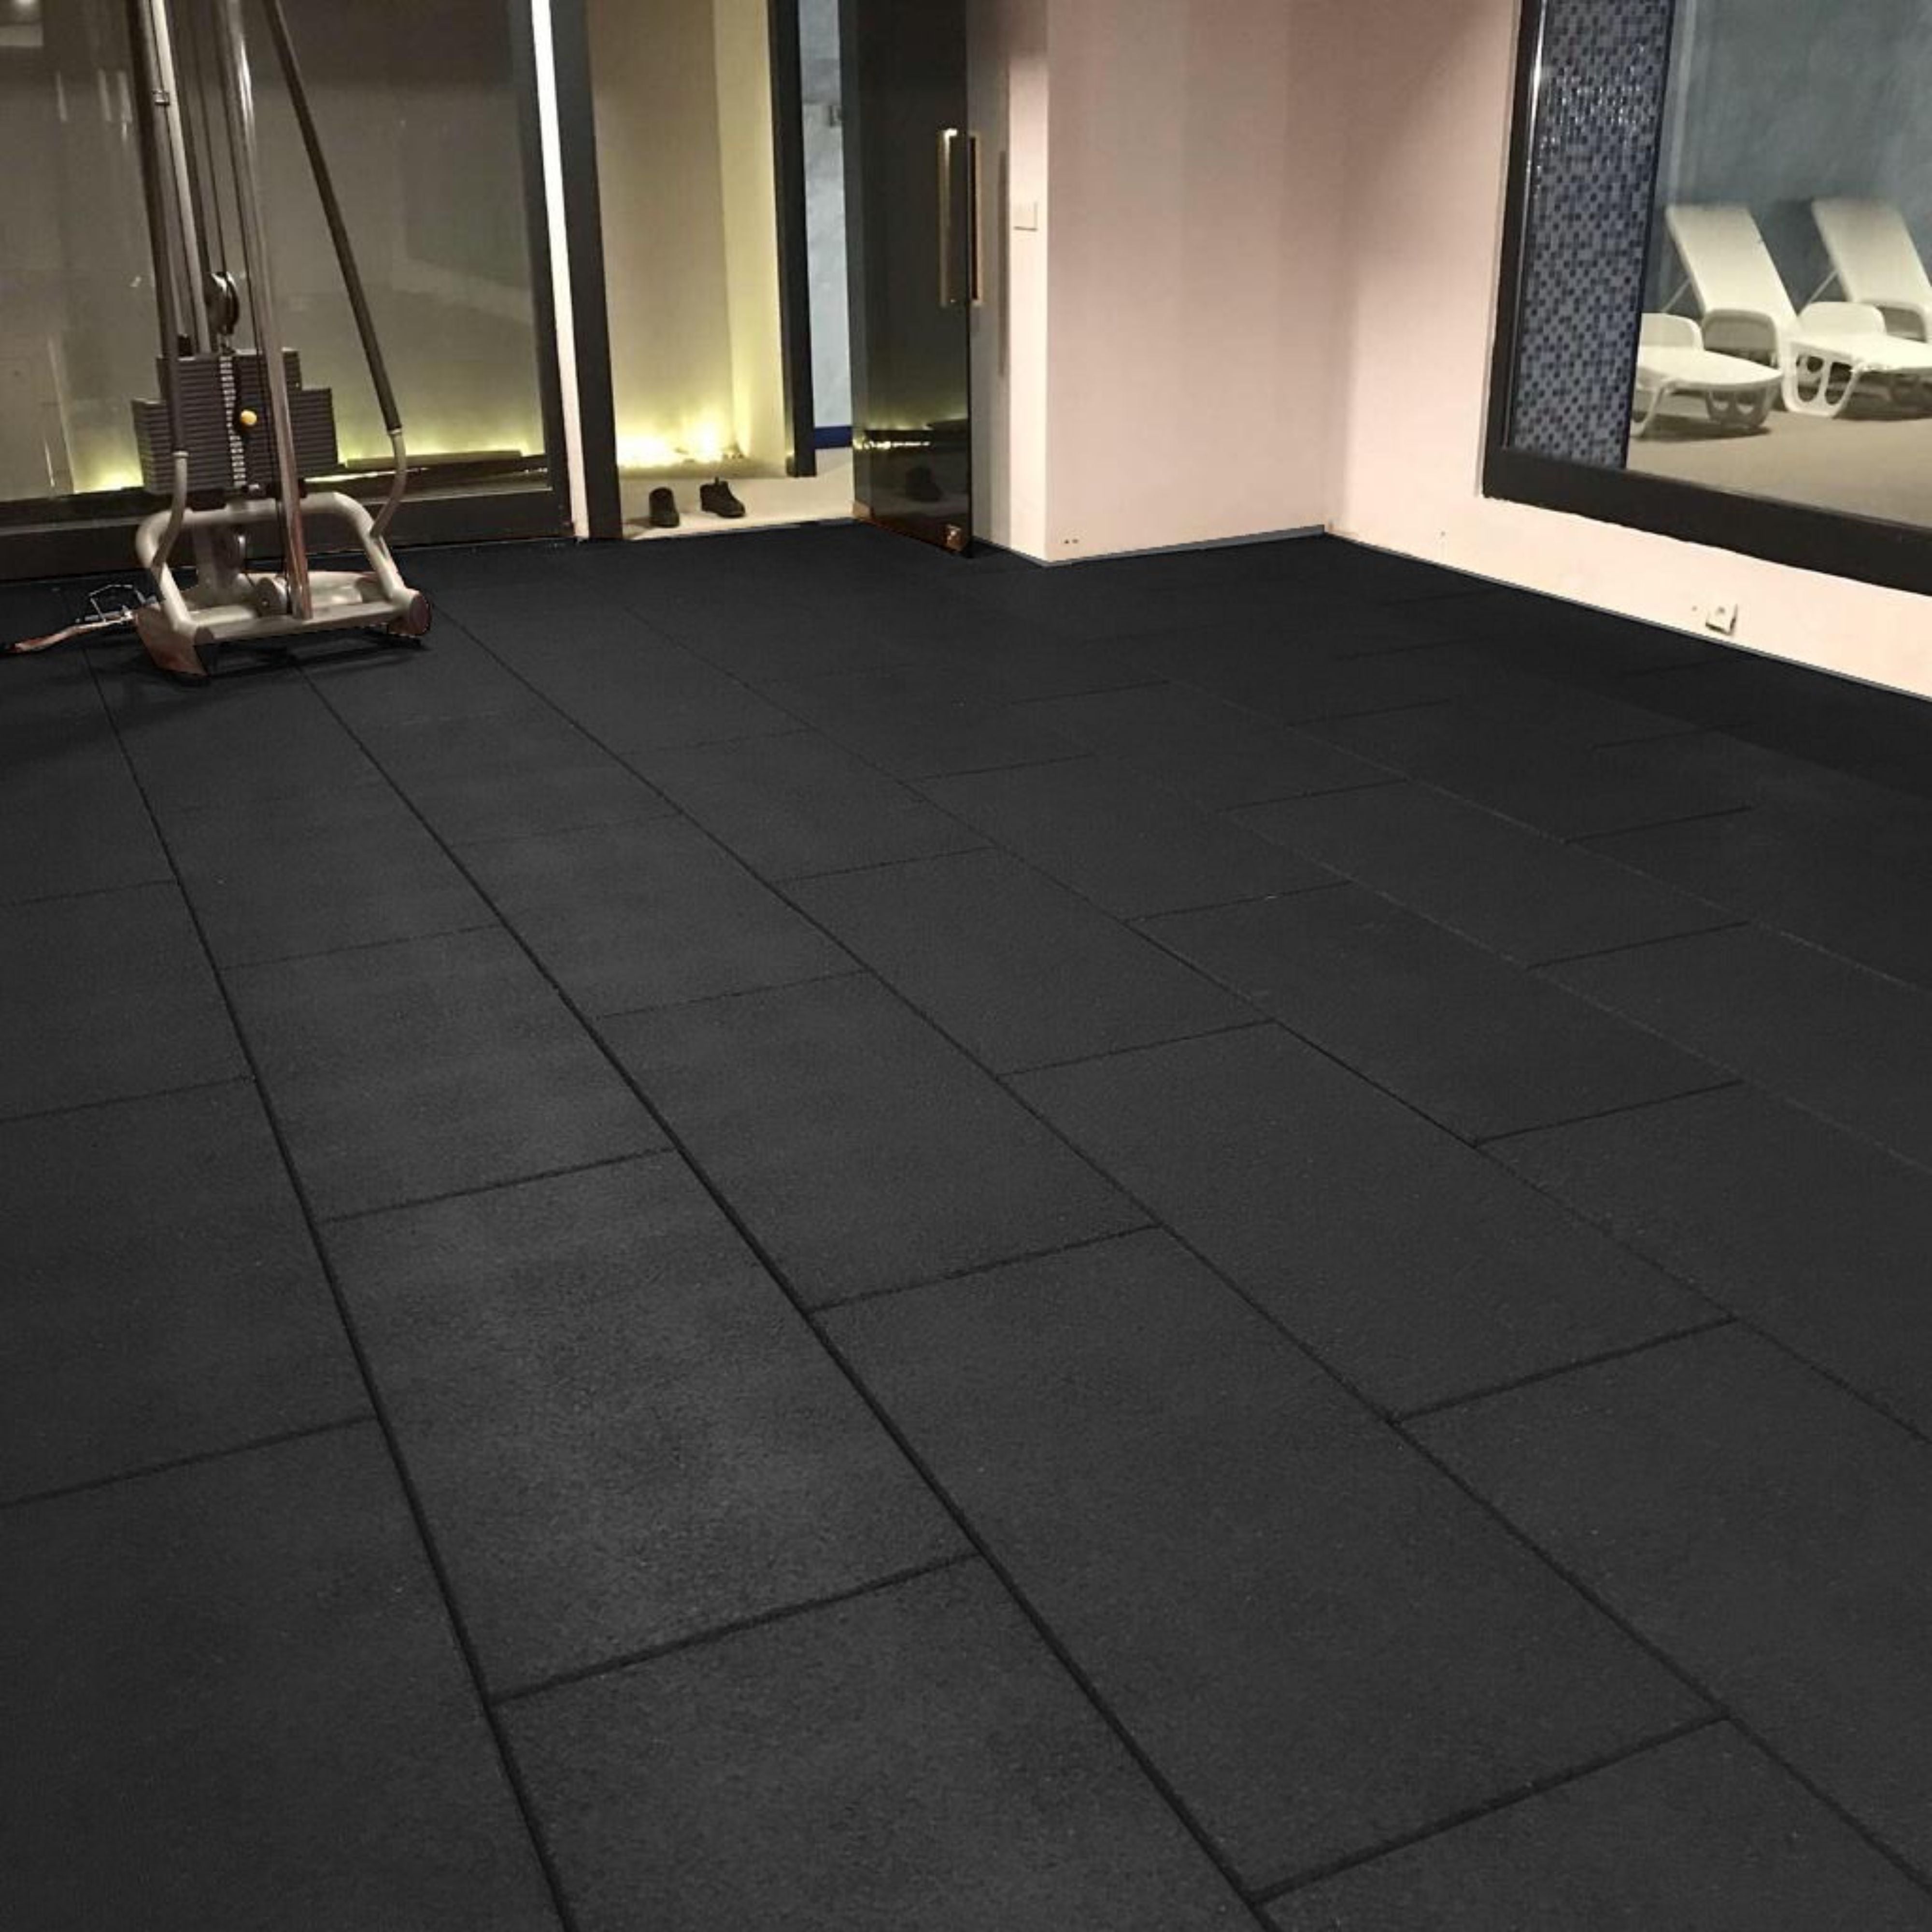 18m2 single garage package, BeFit Flatline Black Rubber Gym Flooring - Cannons UK